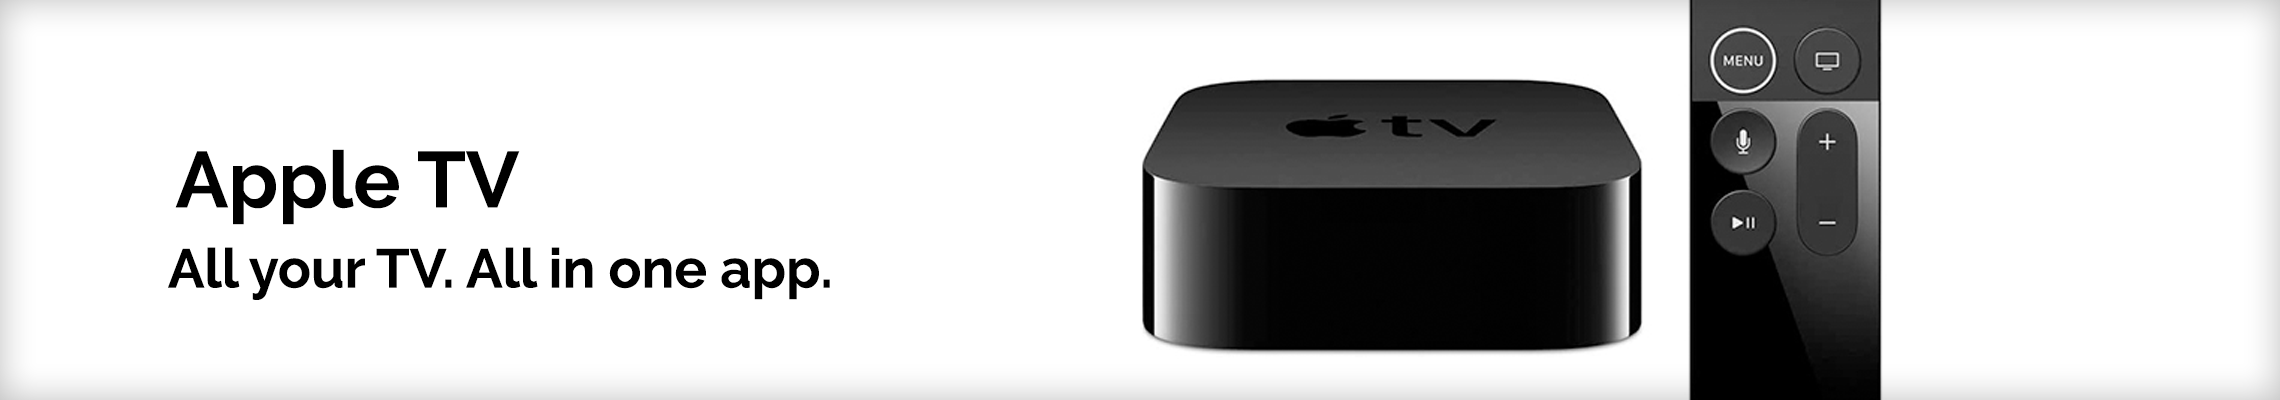 Apple Mac Desktops - The Future of Mac